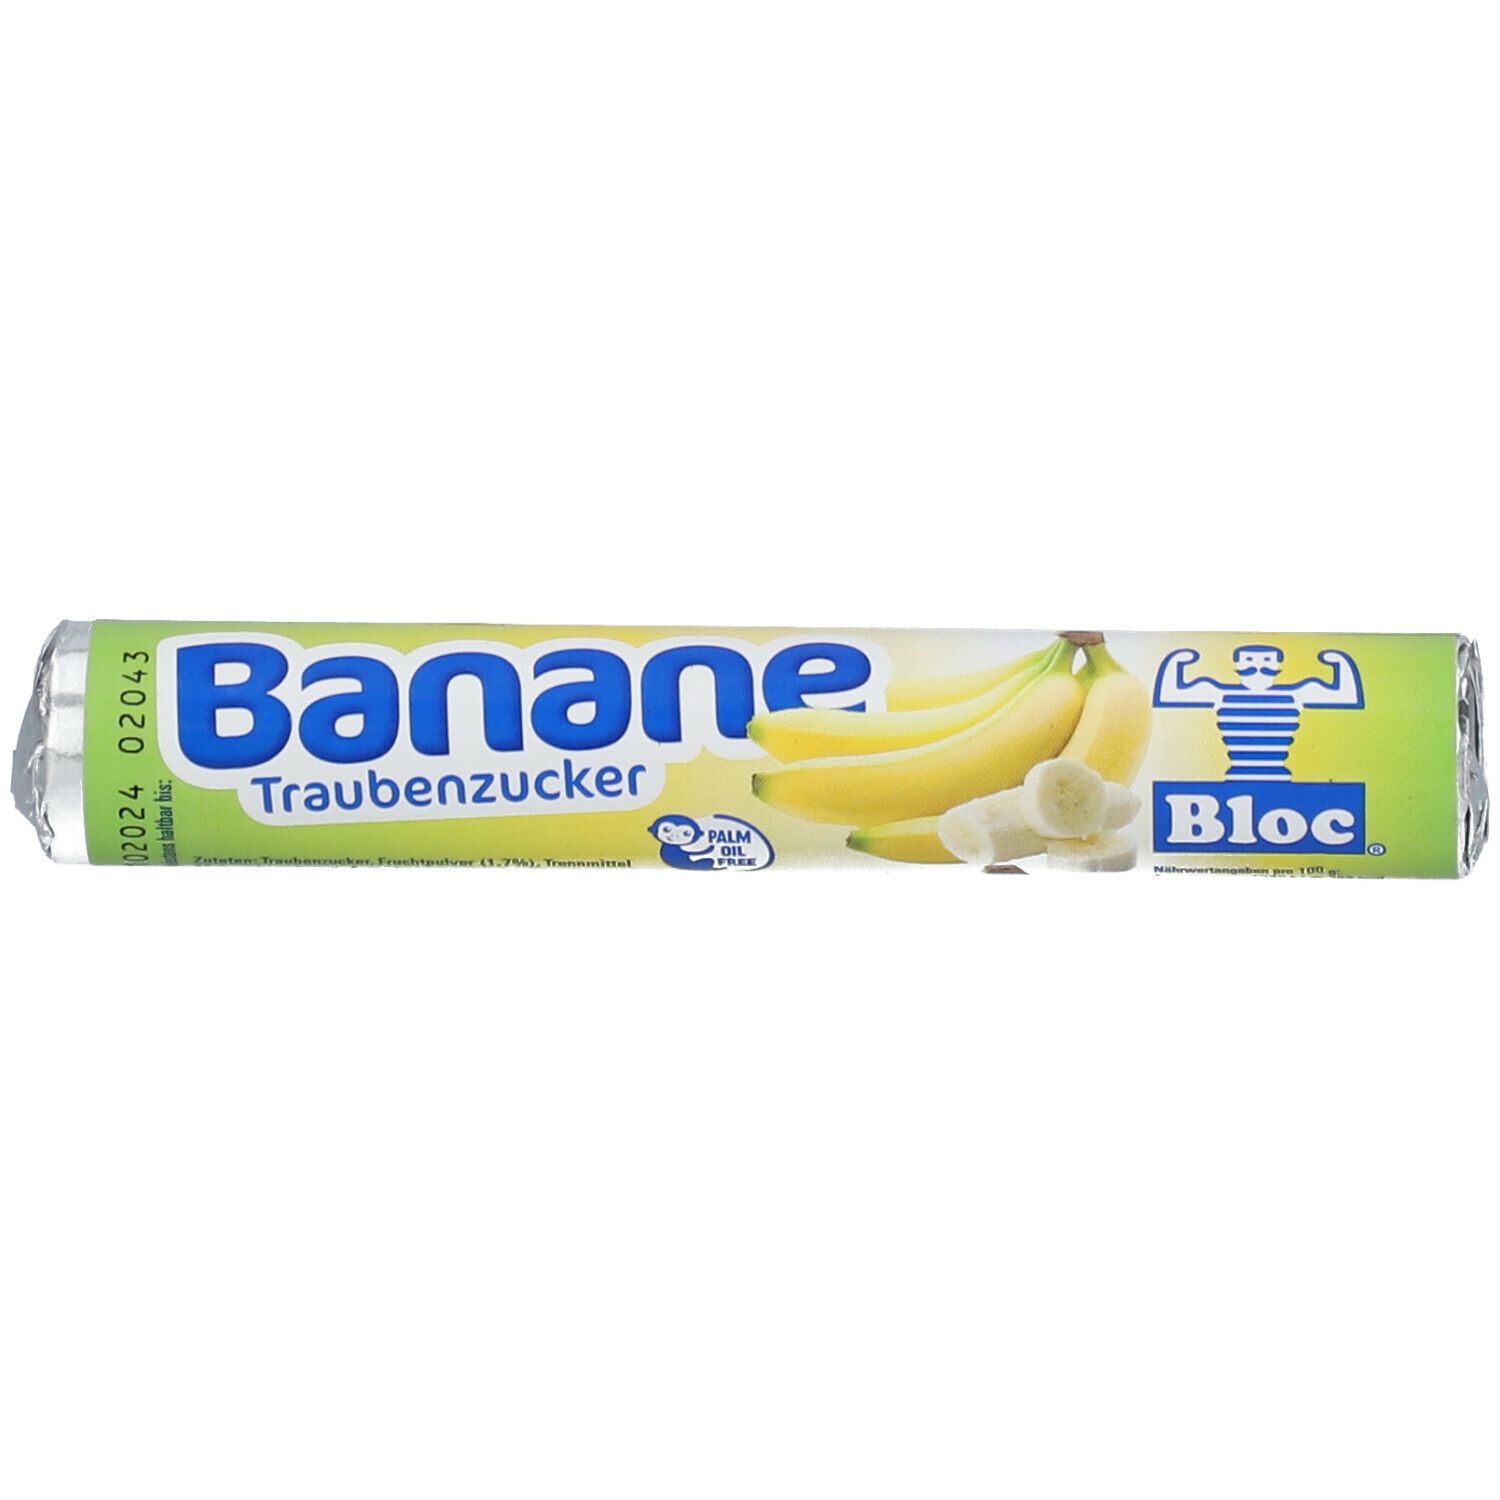 Bloc® Traubenzuckerrolle Banane